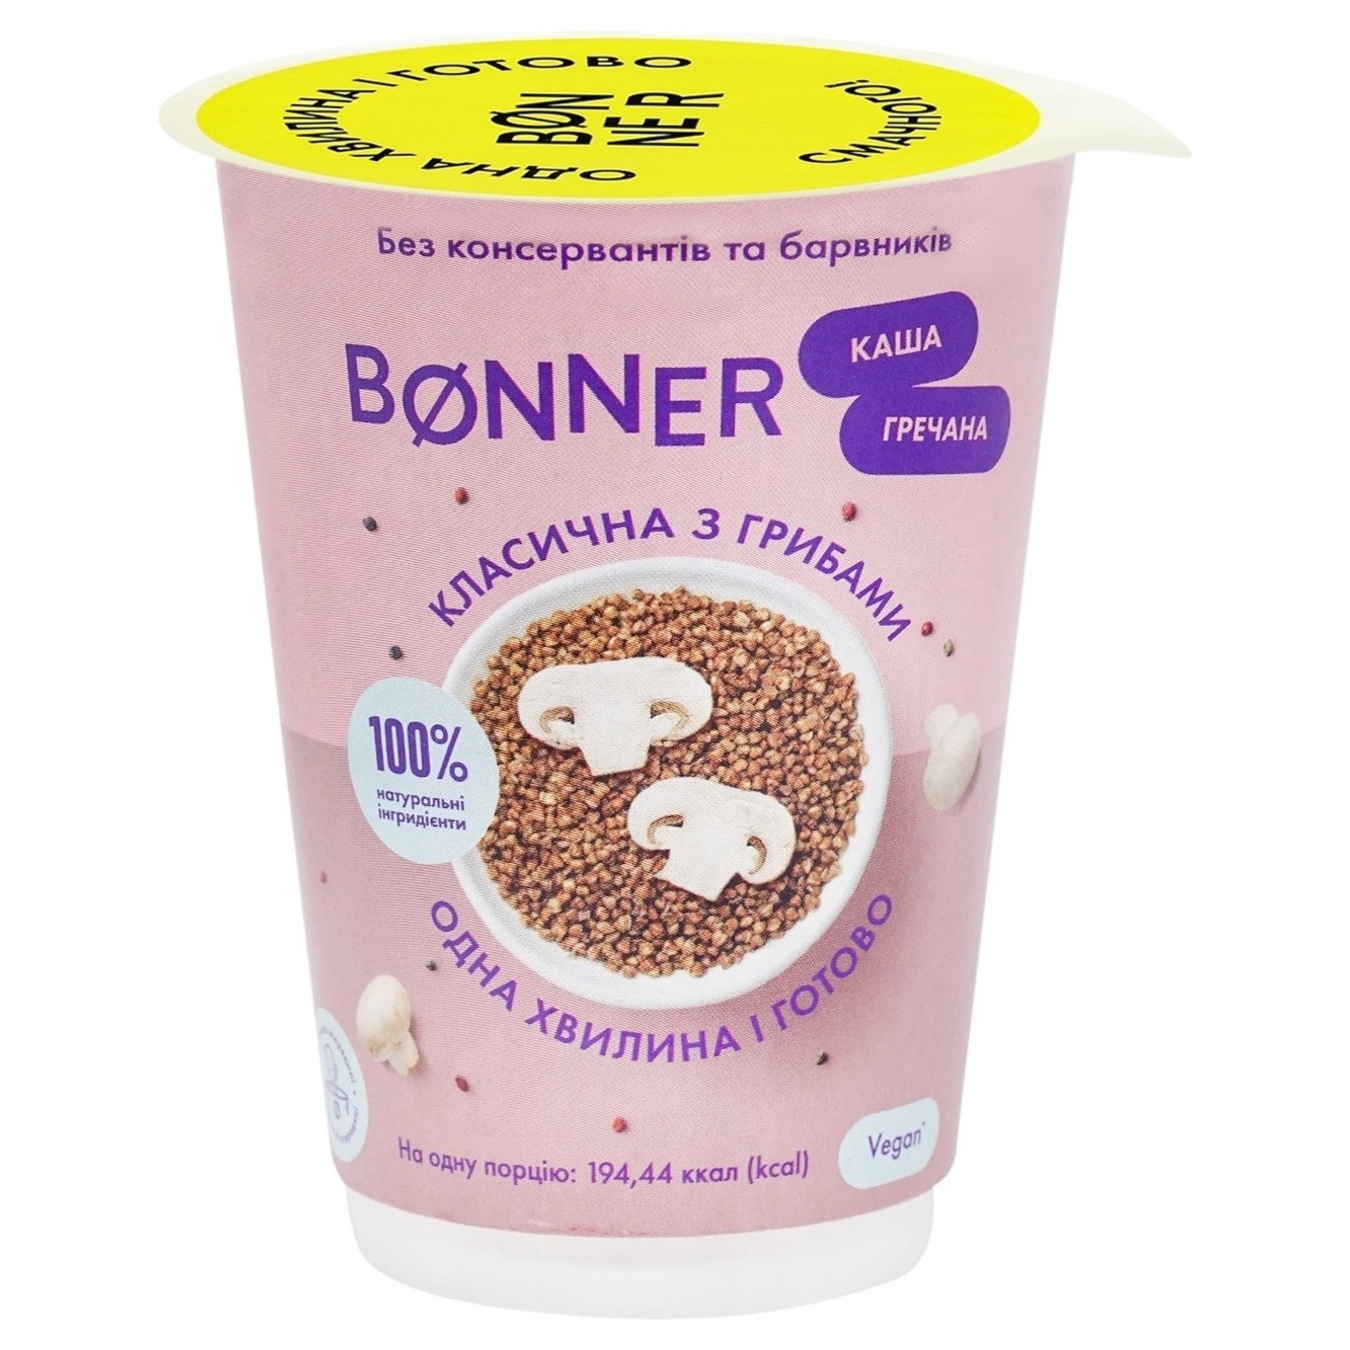 Bonner instant buckwheat porridge with mushrooms 60g